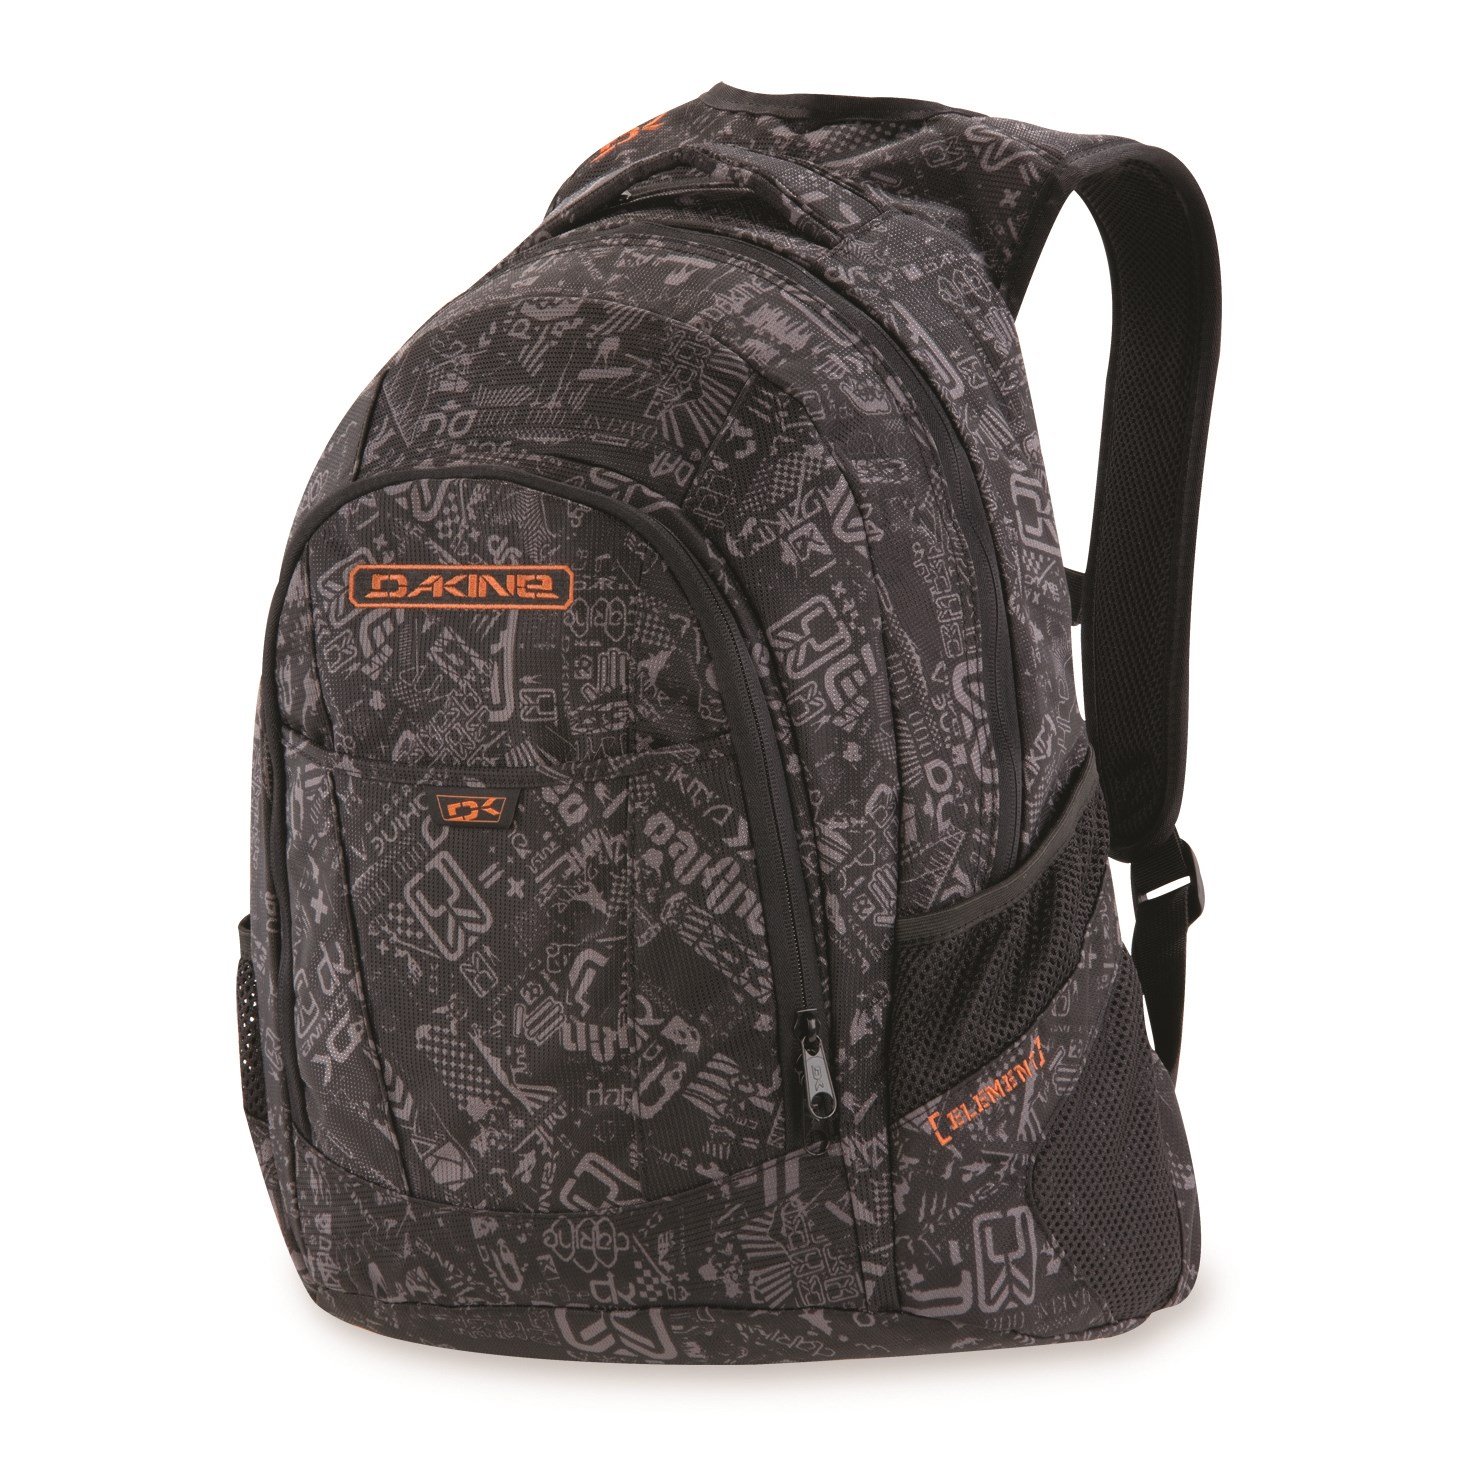 Element backpack | Backpacks, Bags, Fashion